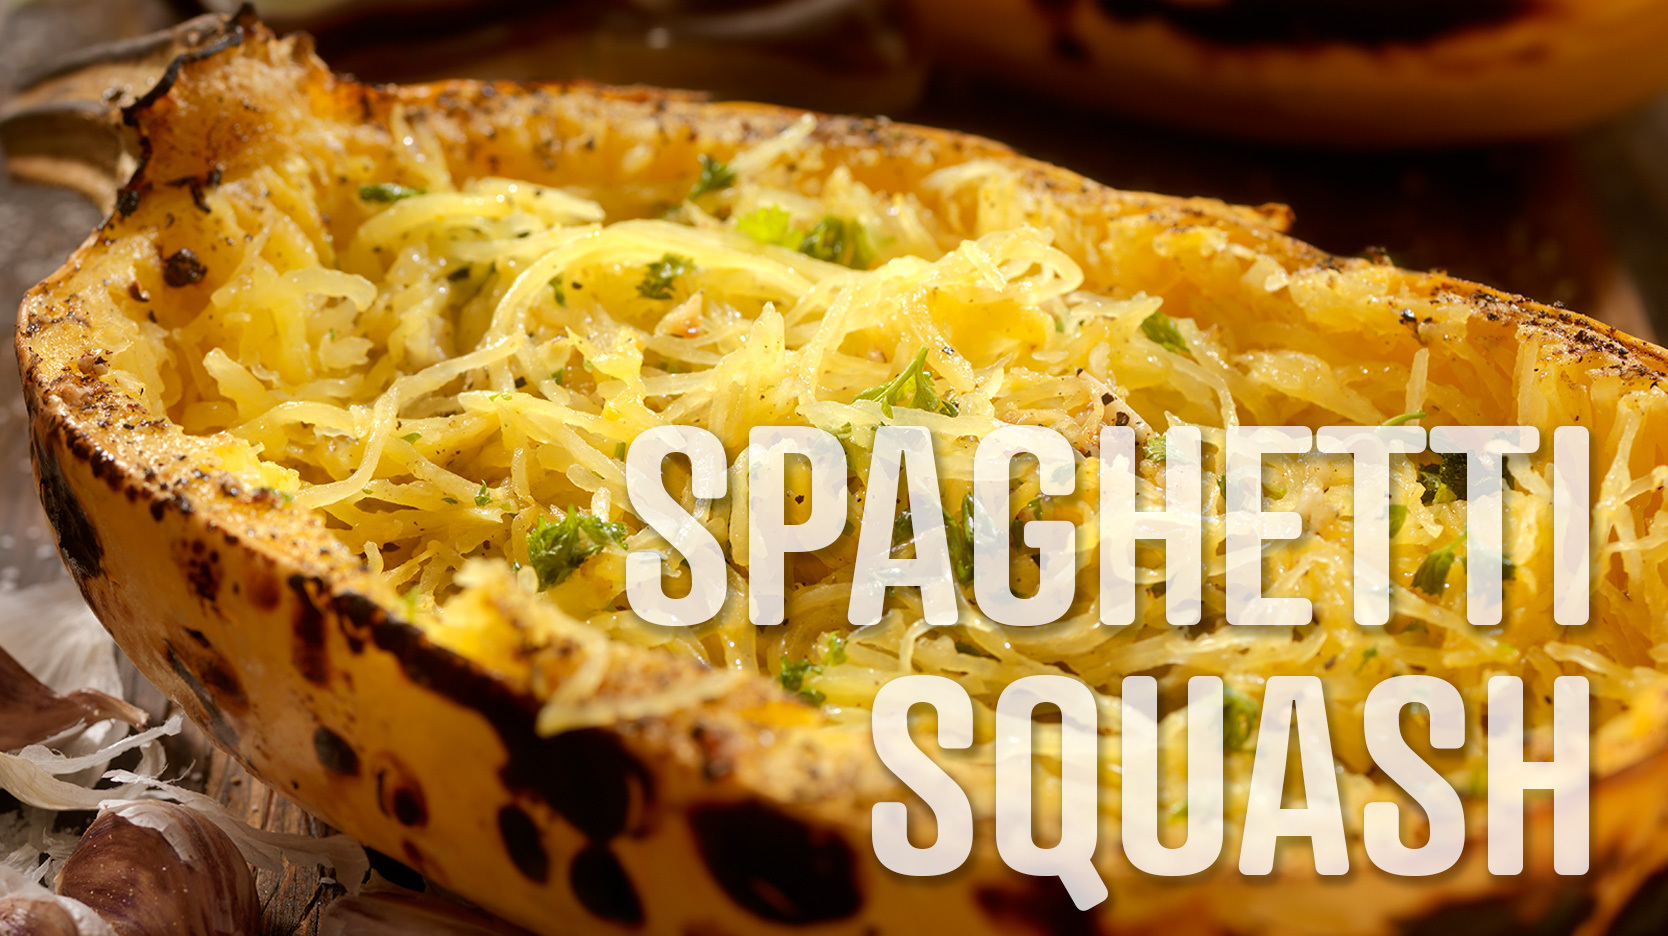 spaghetti squash s food word